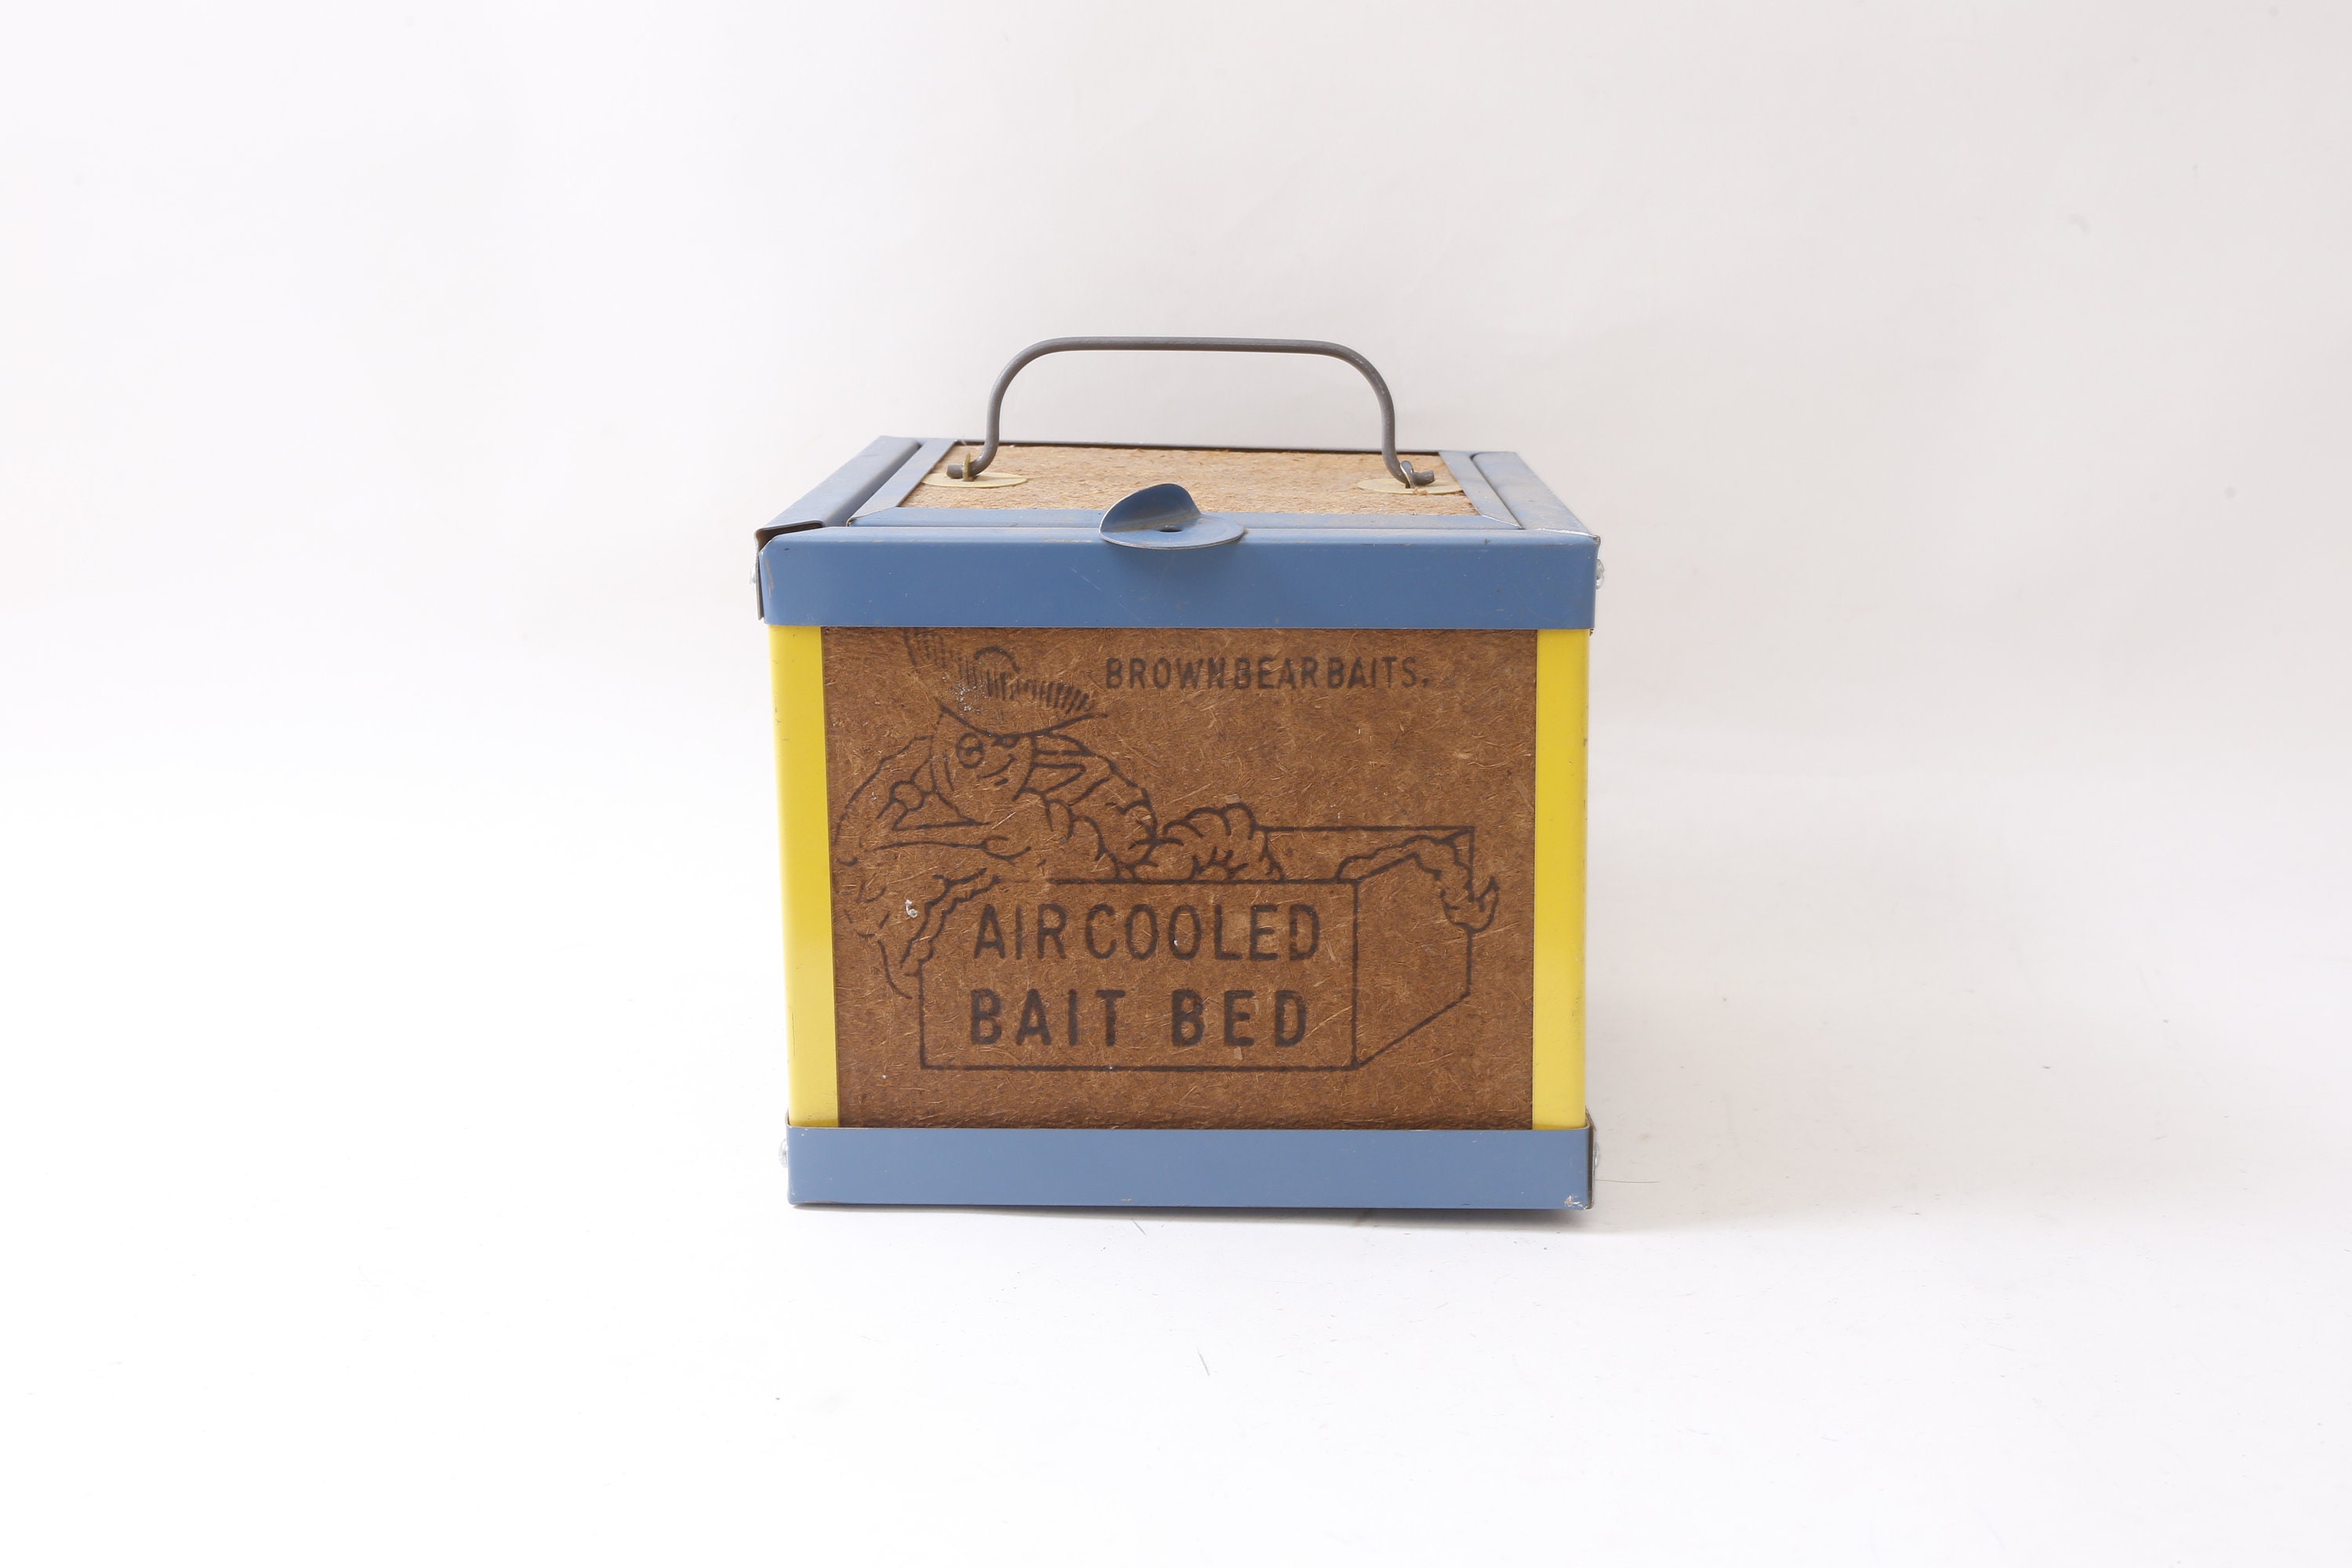 Aircooled Bait Bed, Brown Bear Baits, Box, Storage, Man Cave